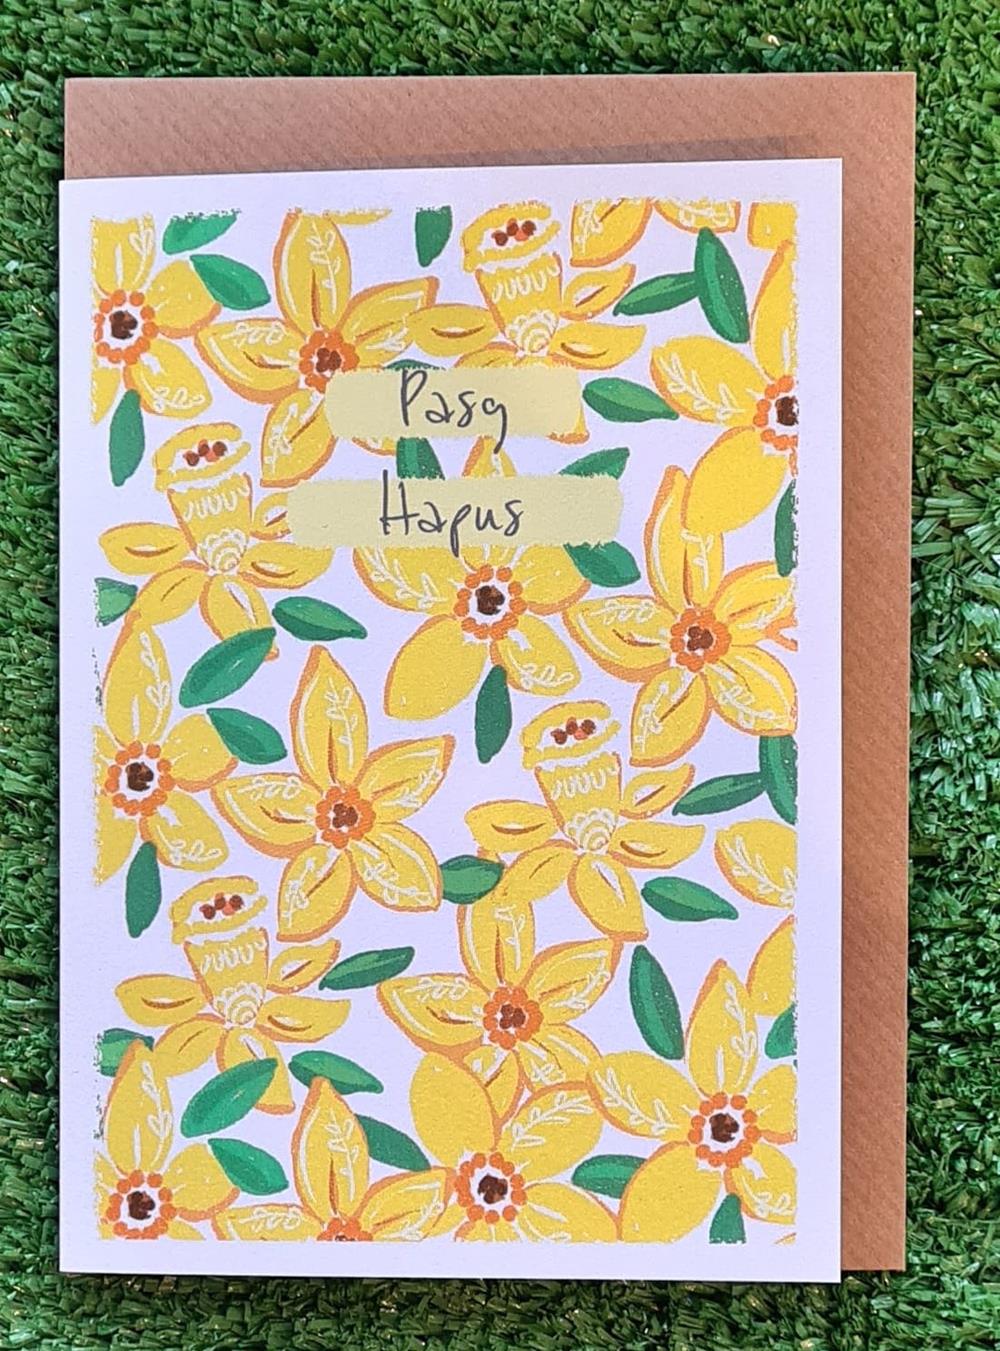 Pasg Hapus Daffodil Card